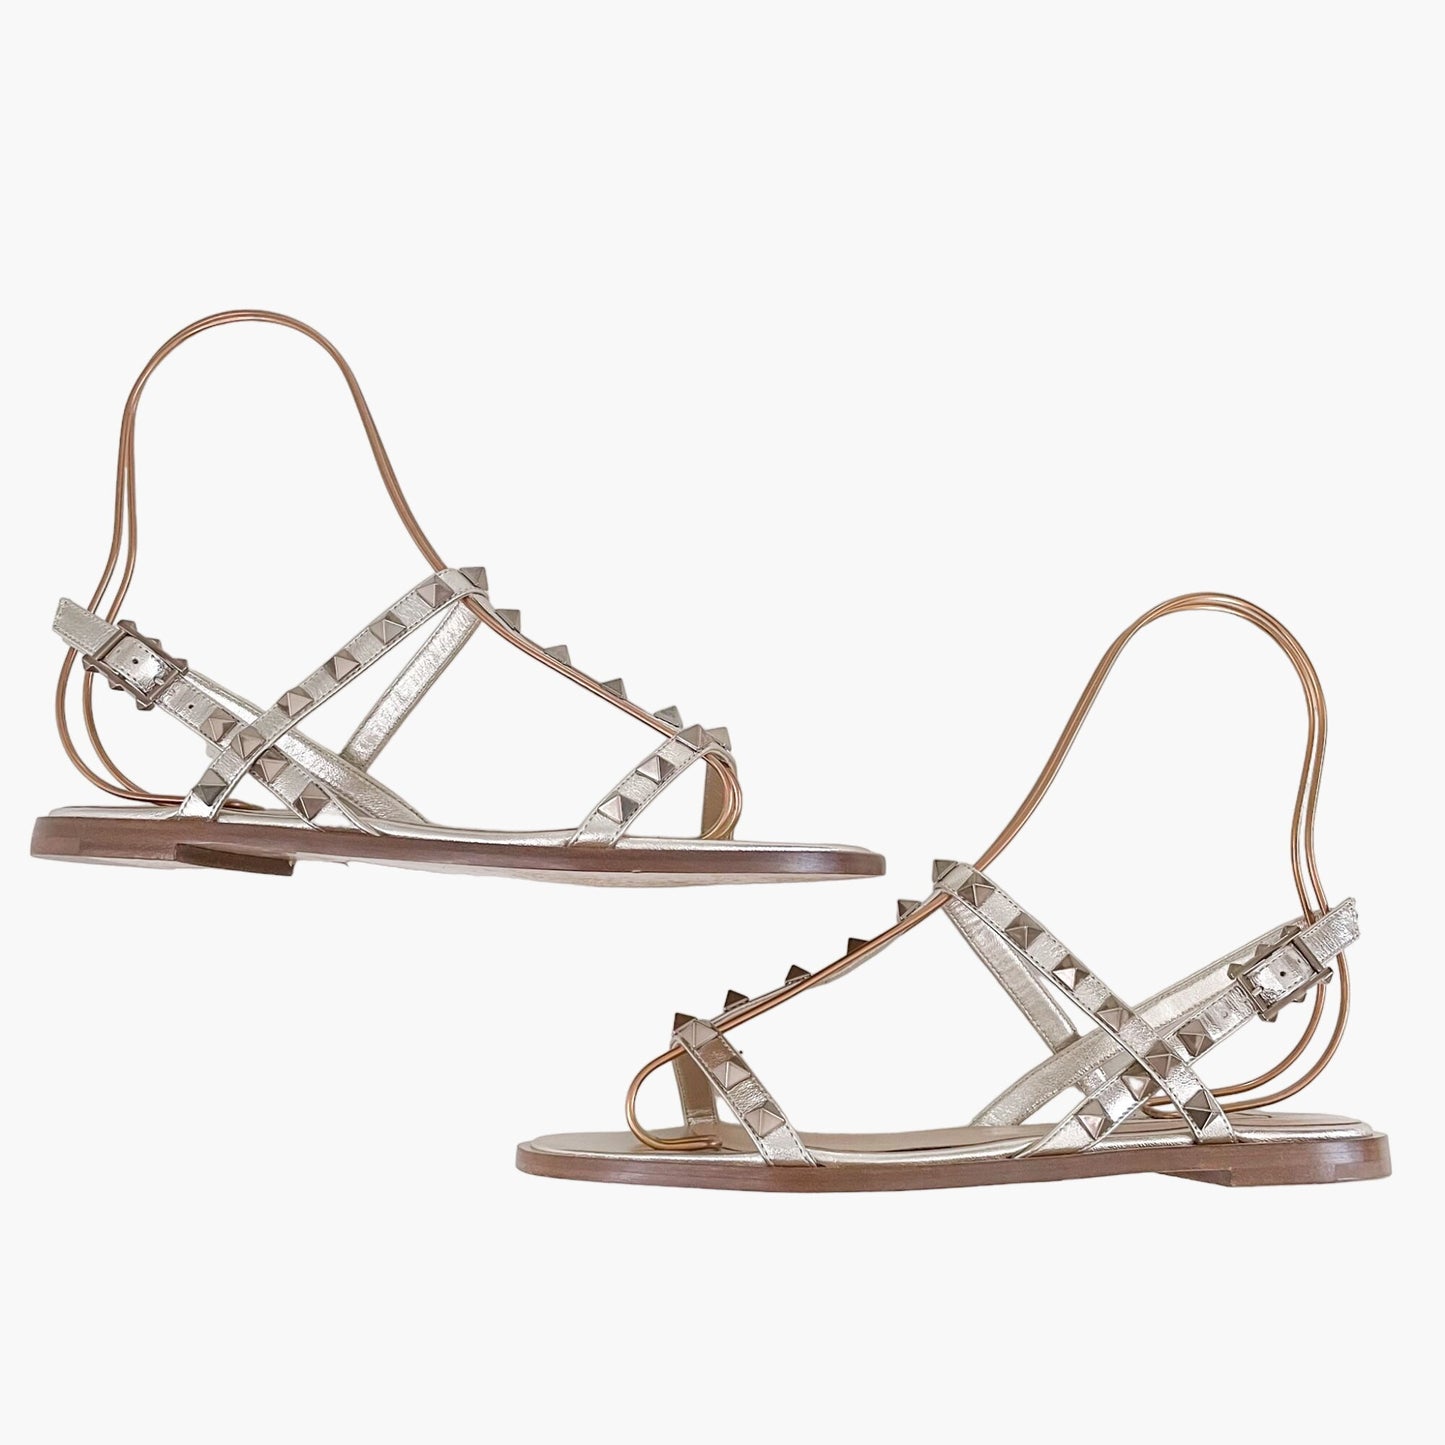 Valentino Garavani Rockstud Sandals in Metallic Silver Size 36